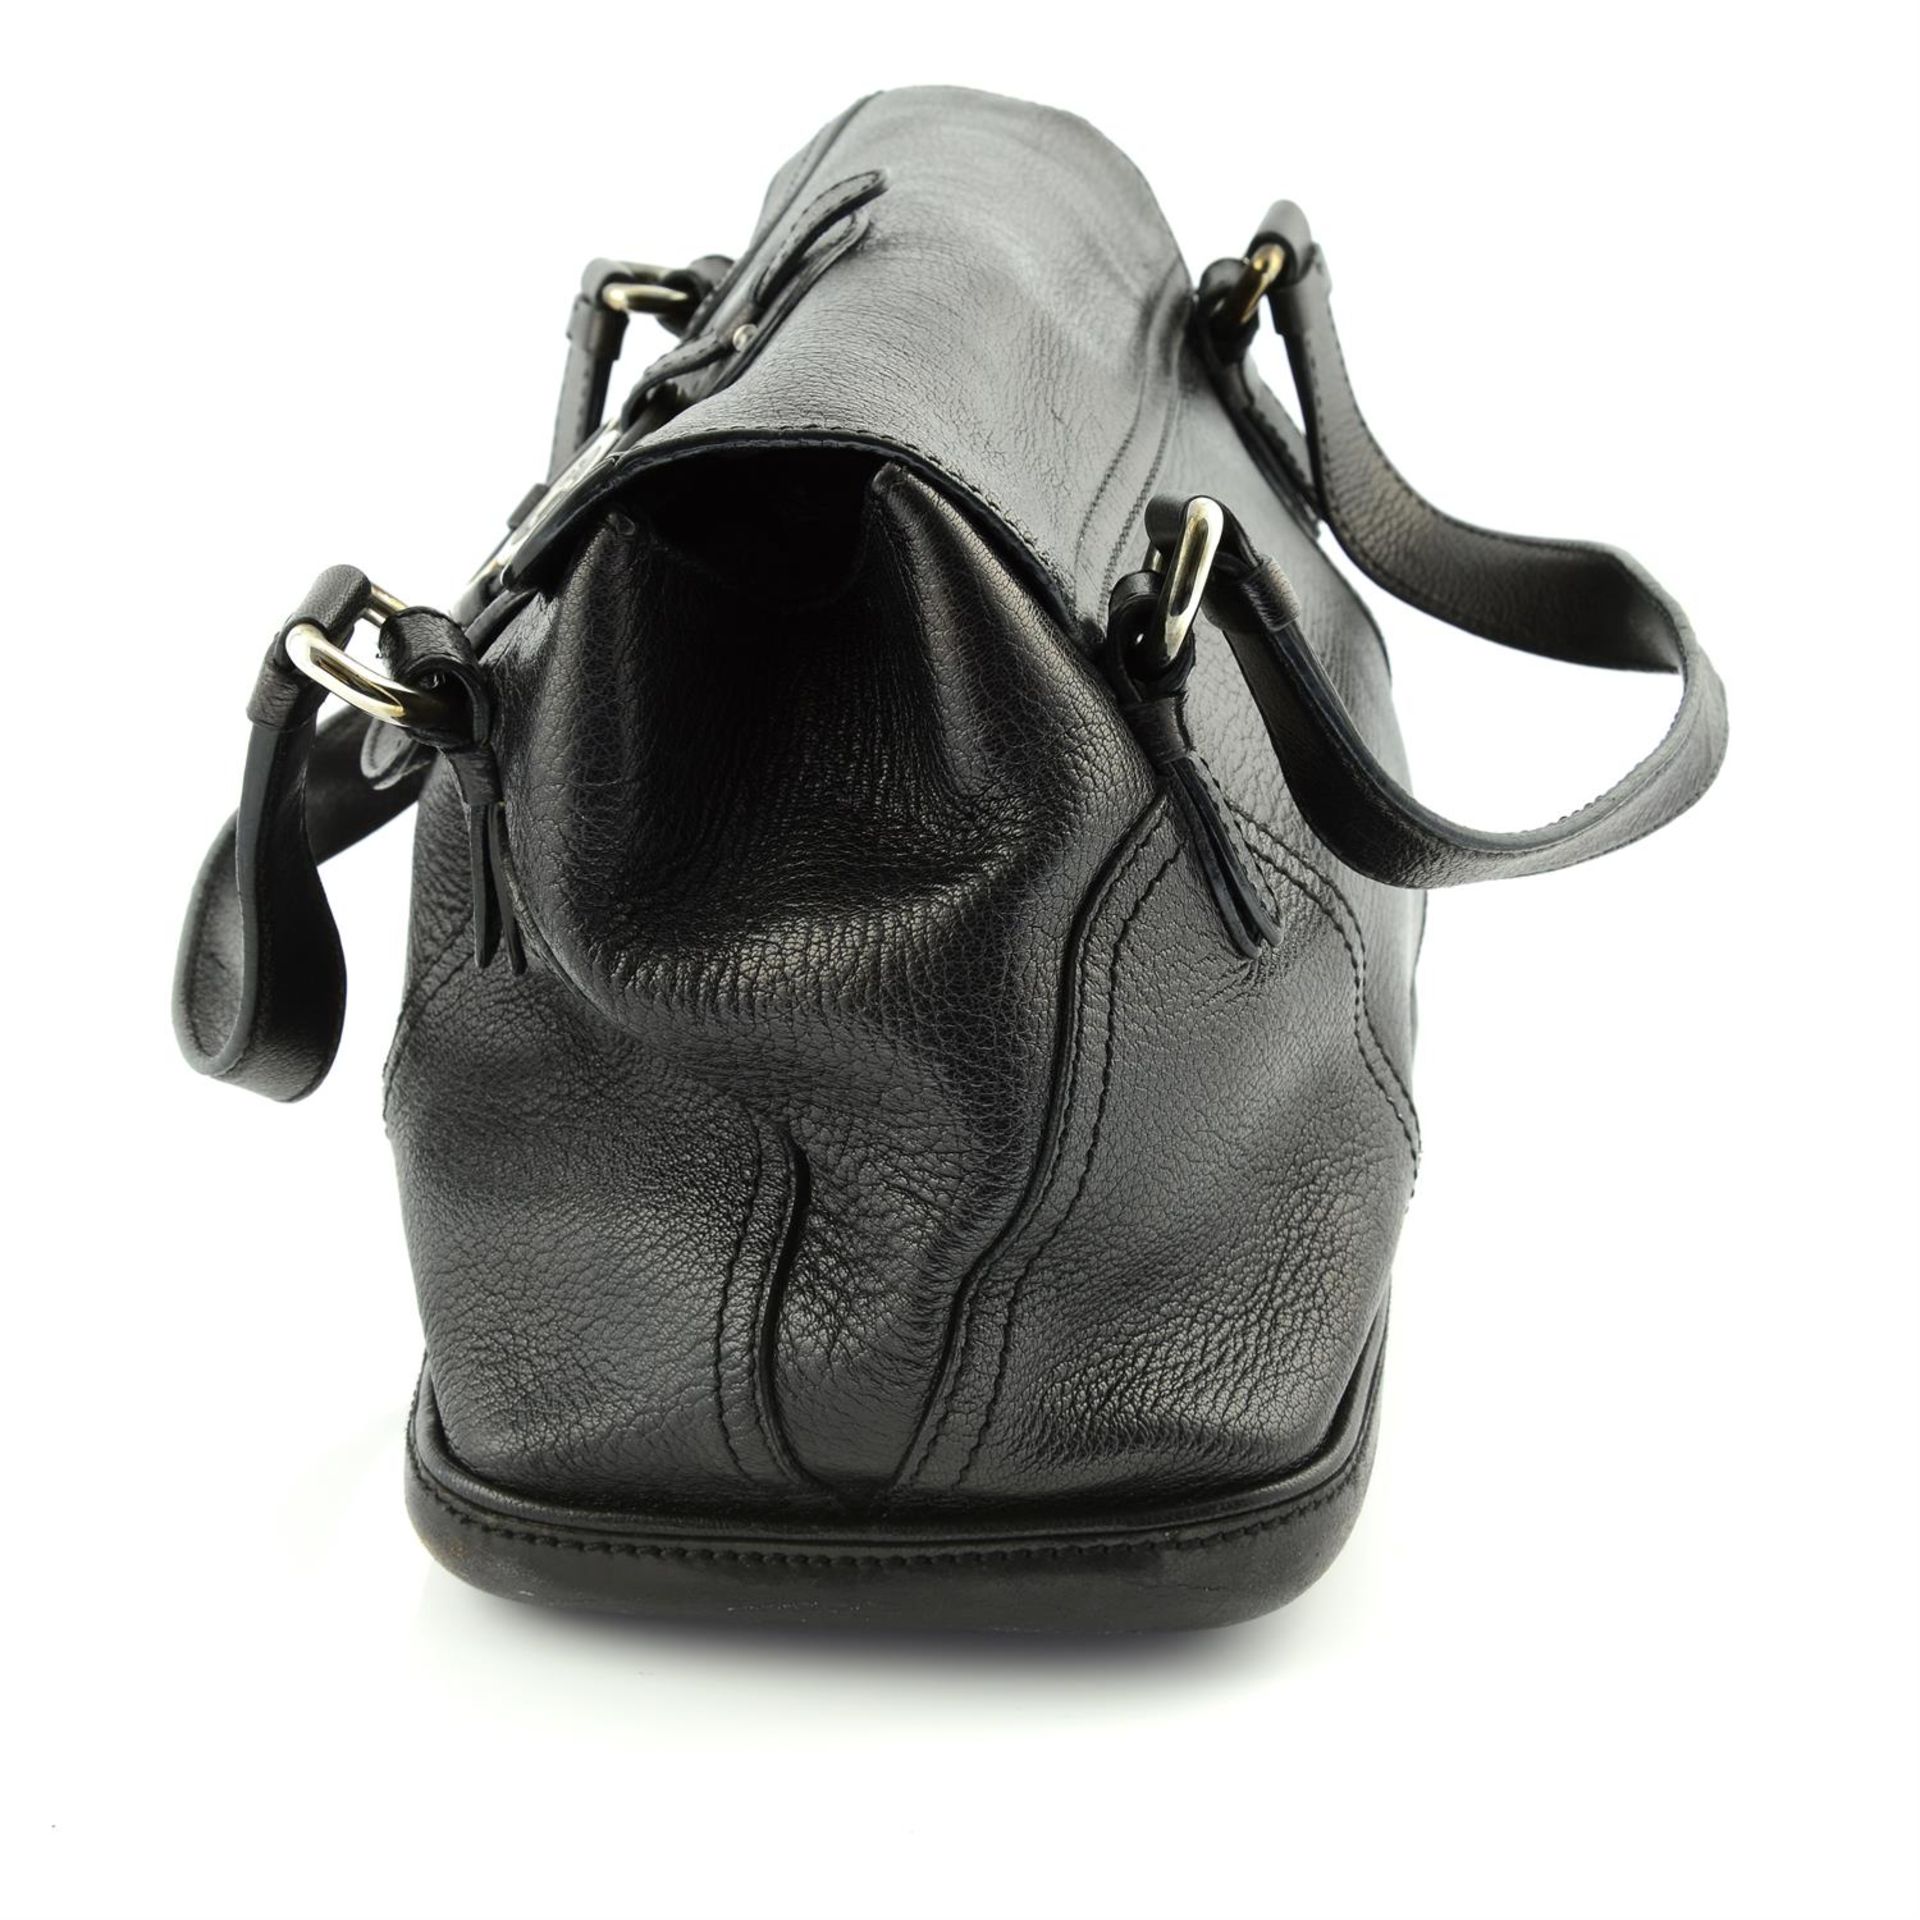 CÉLINE - a black leather handbag. - Image 3 of 6